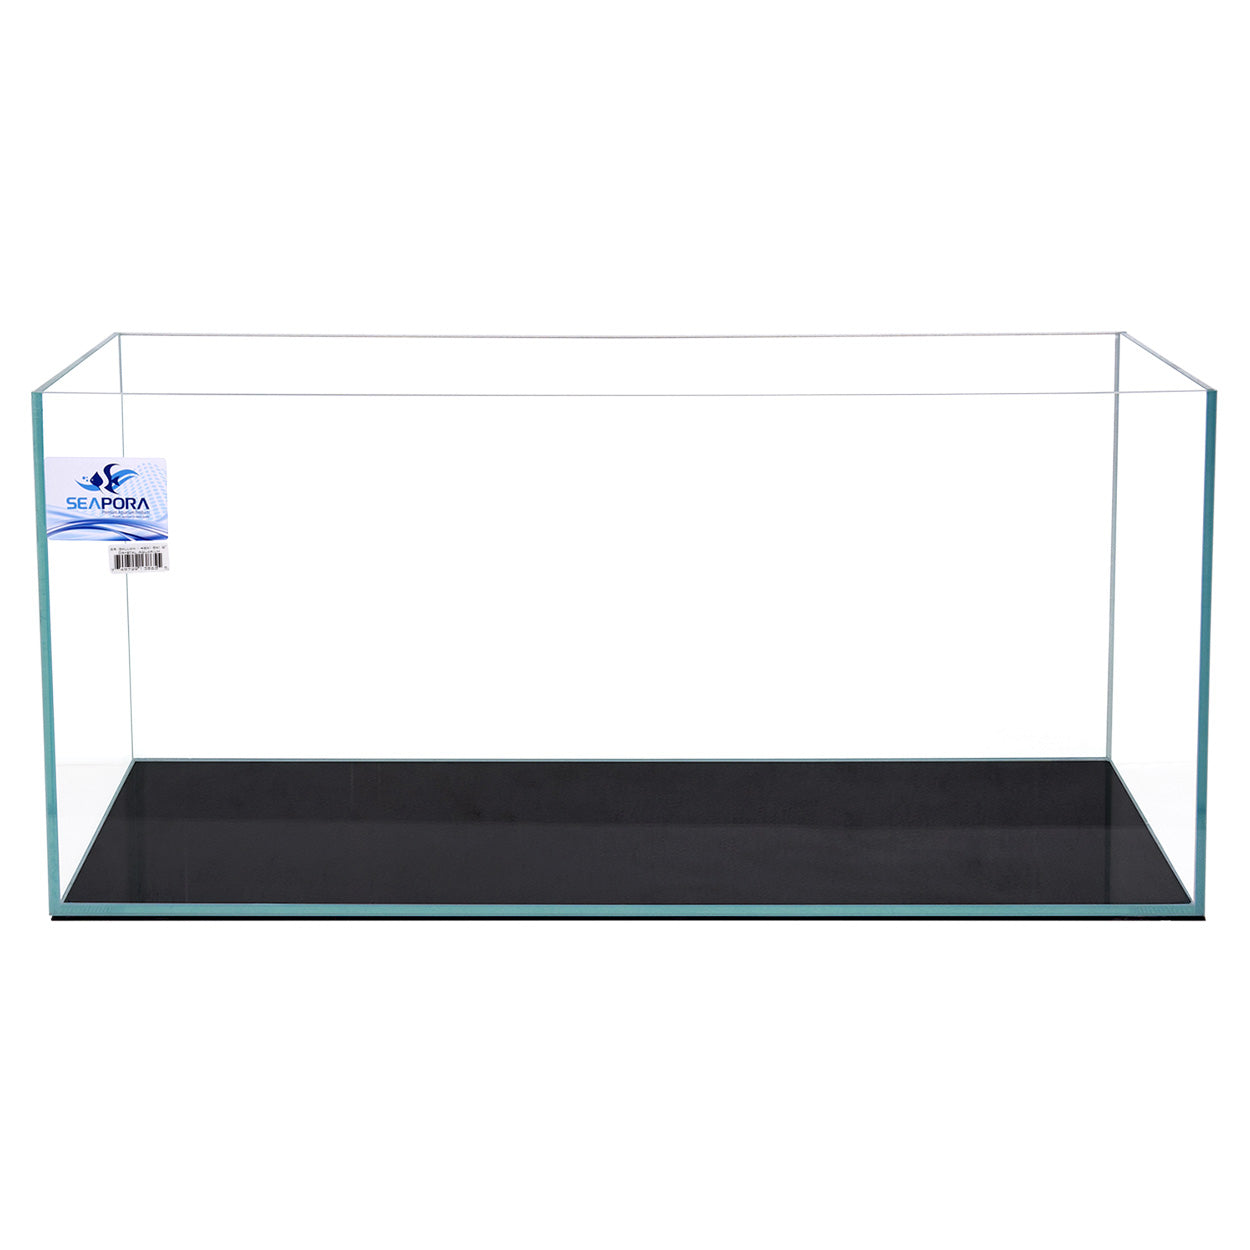 Seapora Crystal Series Aquarium - 64 Gallons Long